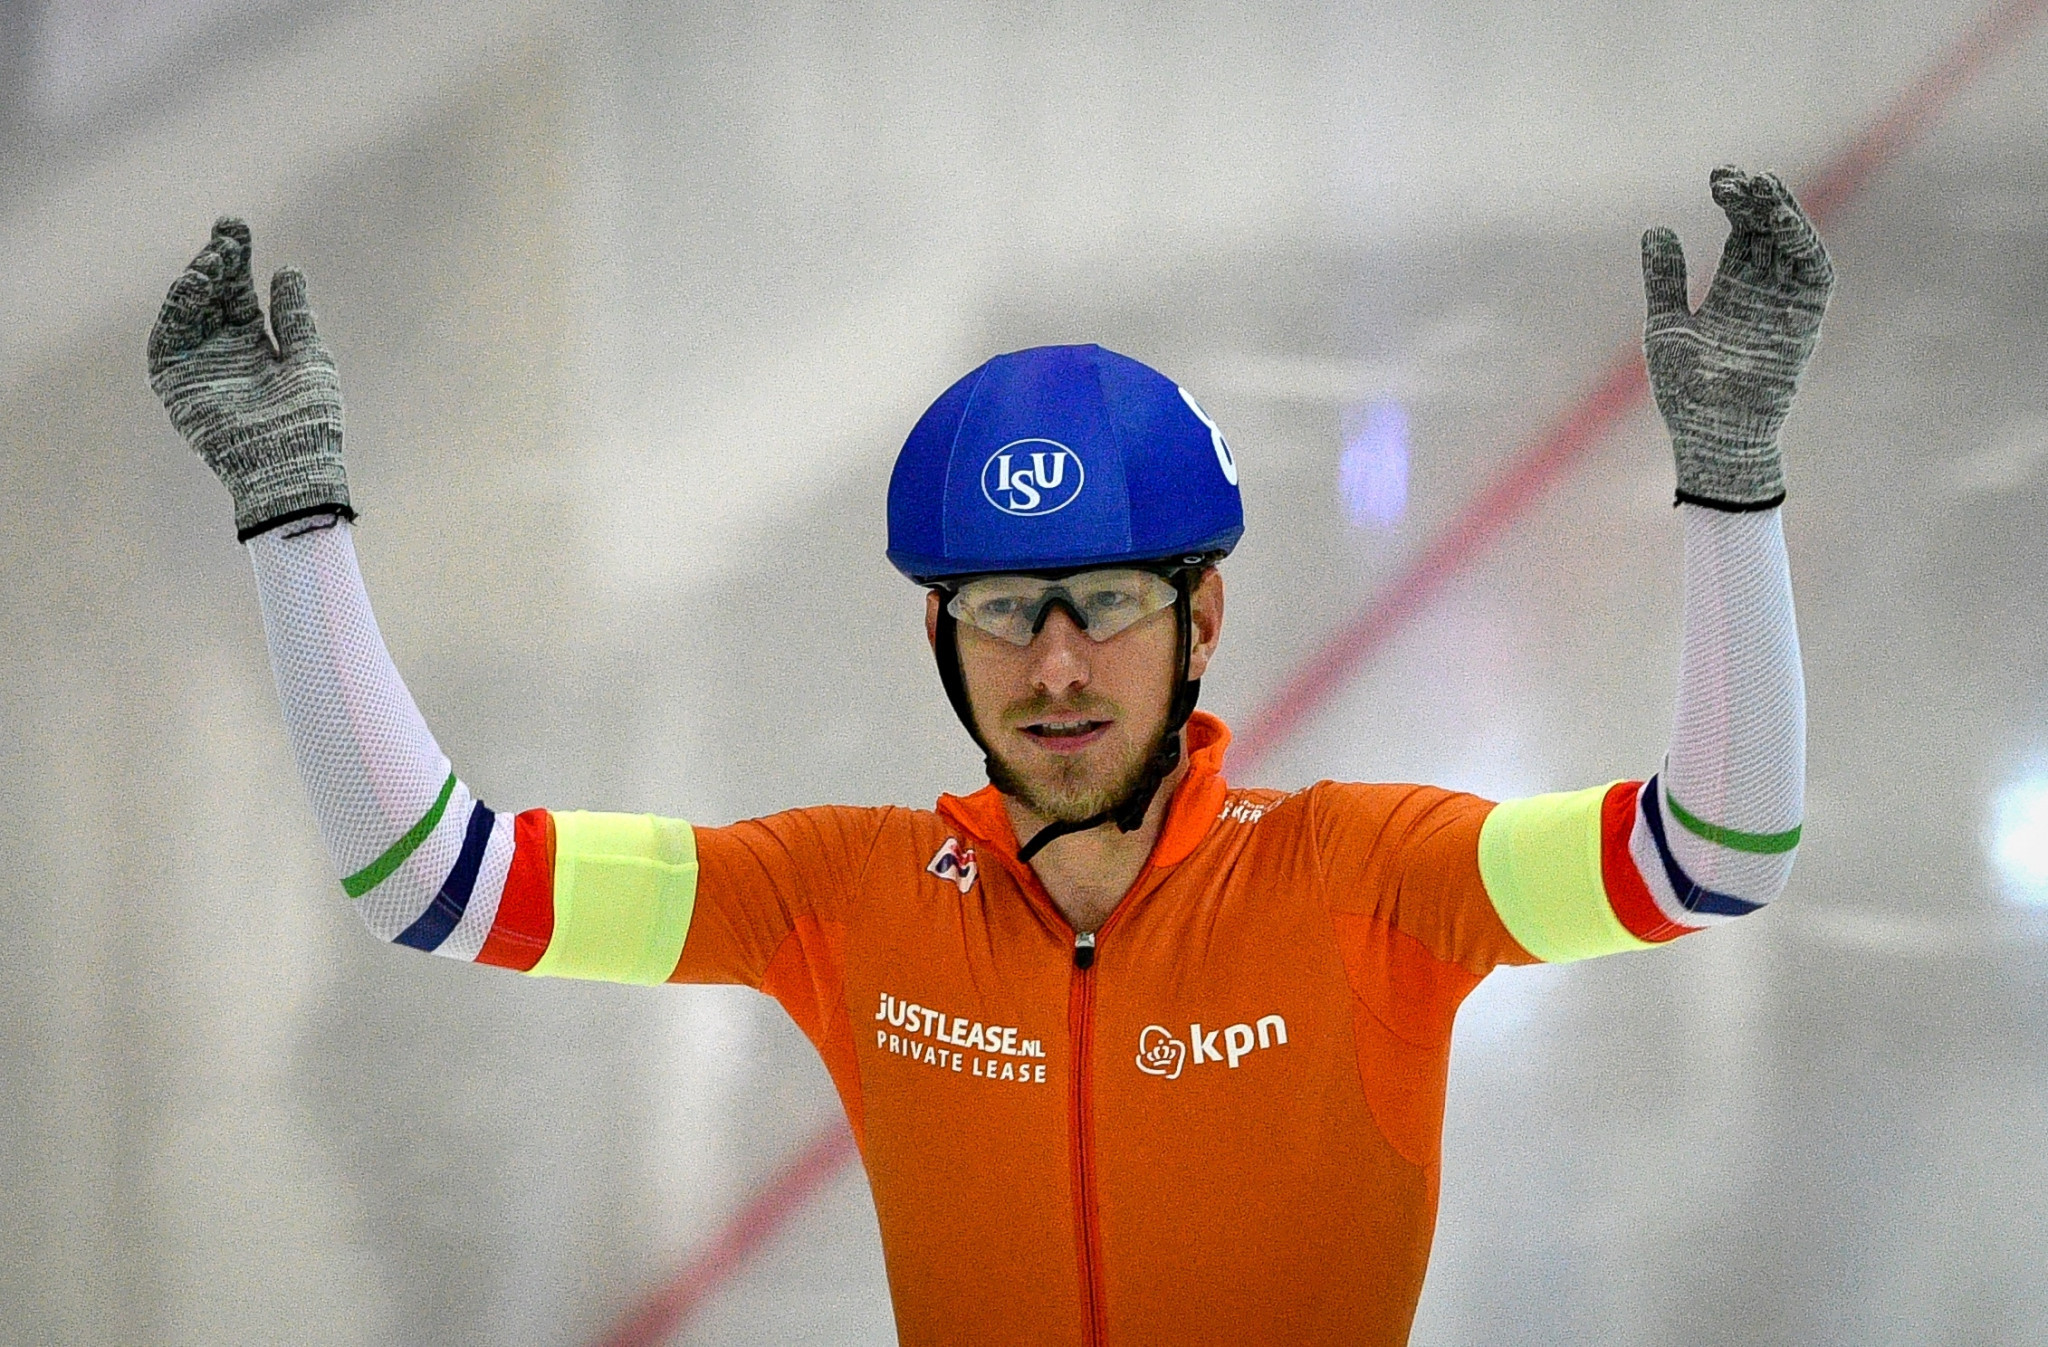 Blokhuijsen and Lollobrigida win mass start titles at European Speed Skating Championships